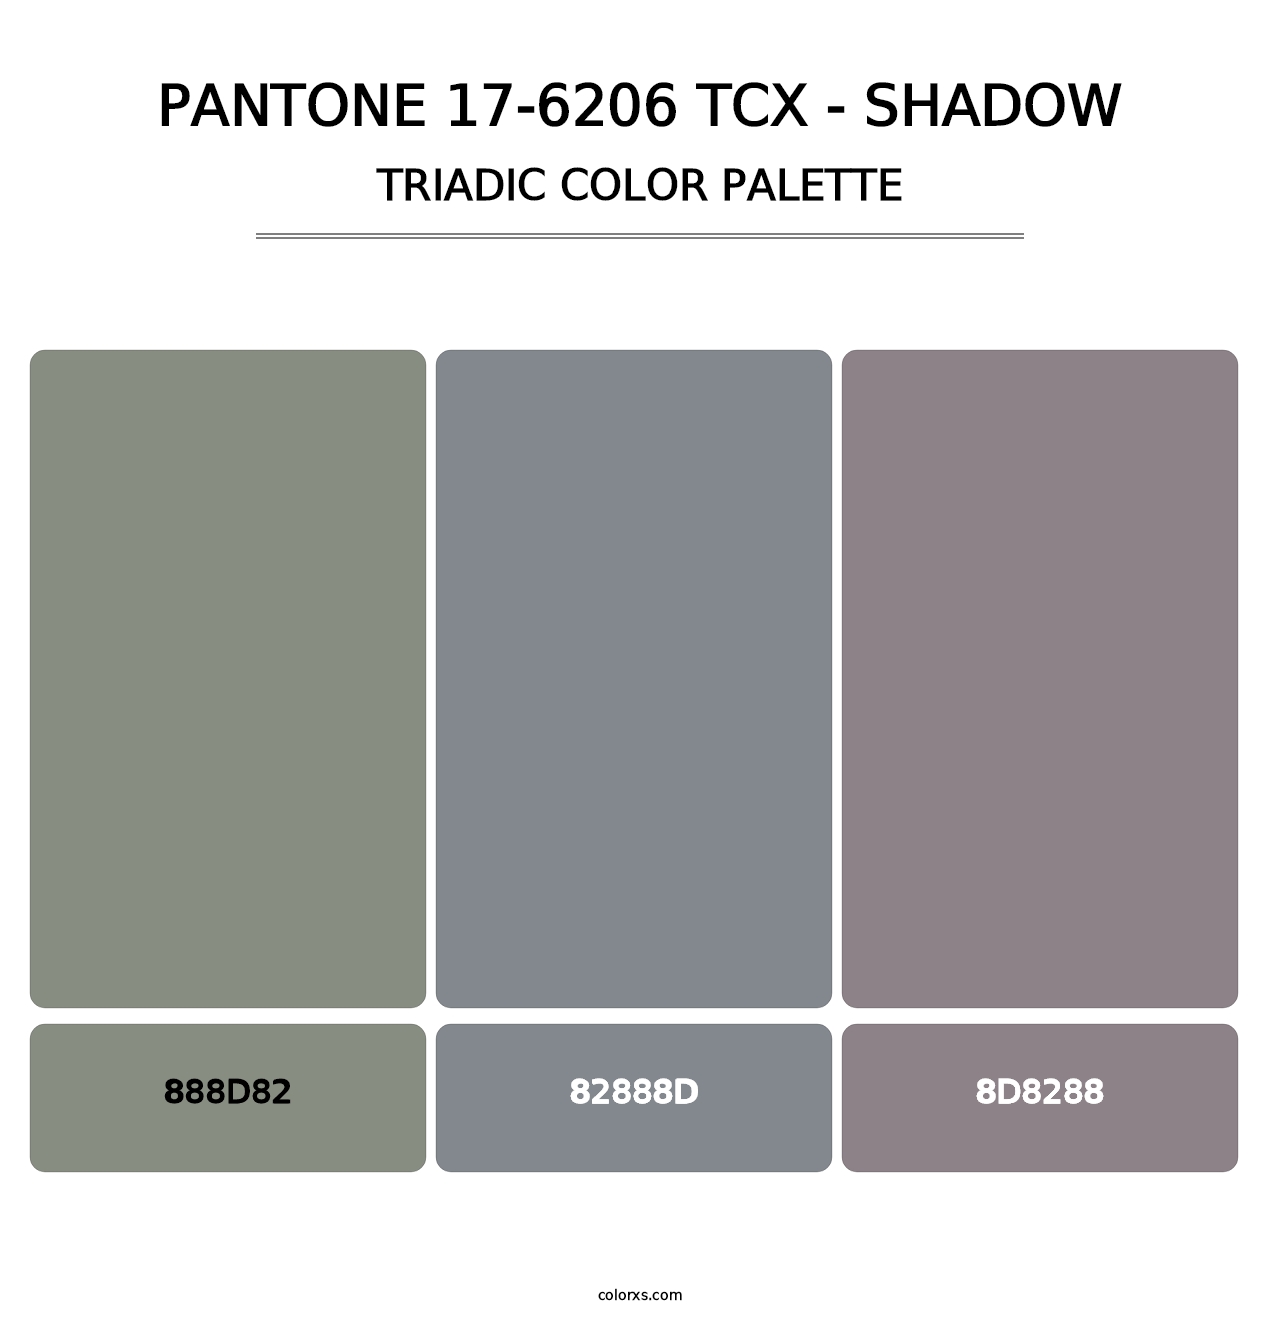 PANTONE 17-6206 TCX - Shadow - Triadic Color Palette